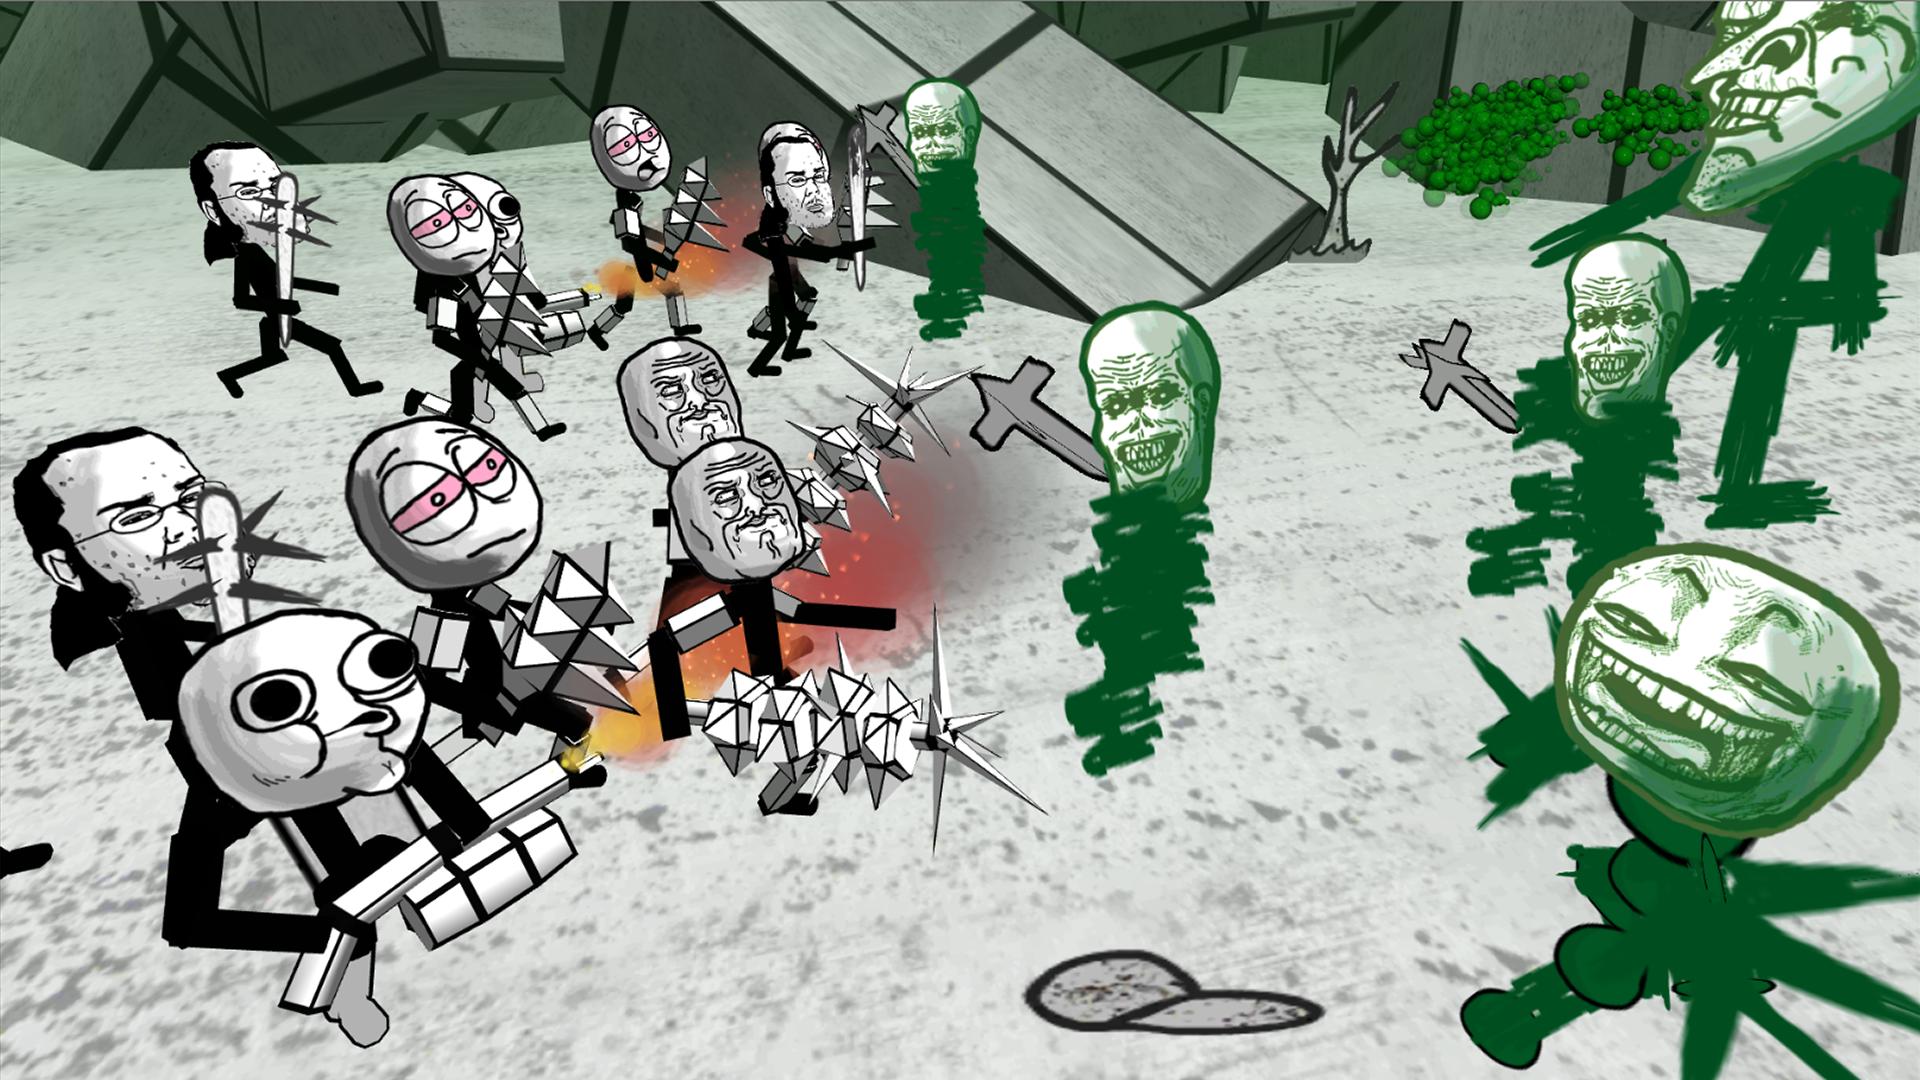 Zombie Meme Battle Simulator Download